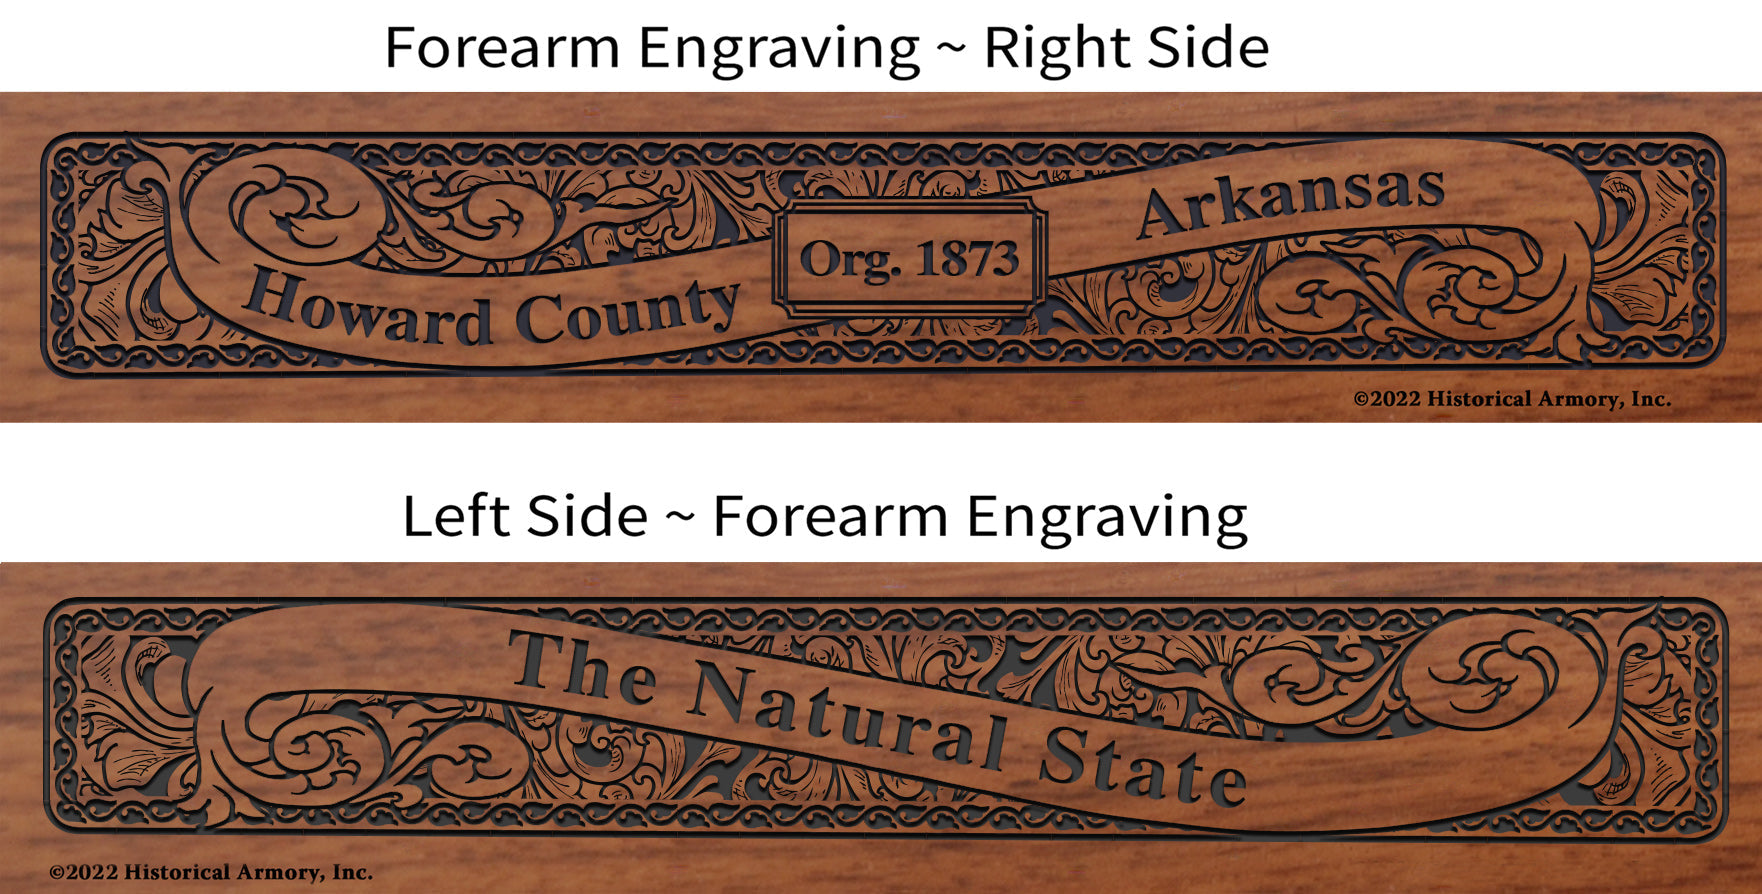 Howard County Arkansas Engraved Rifle Forearm